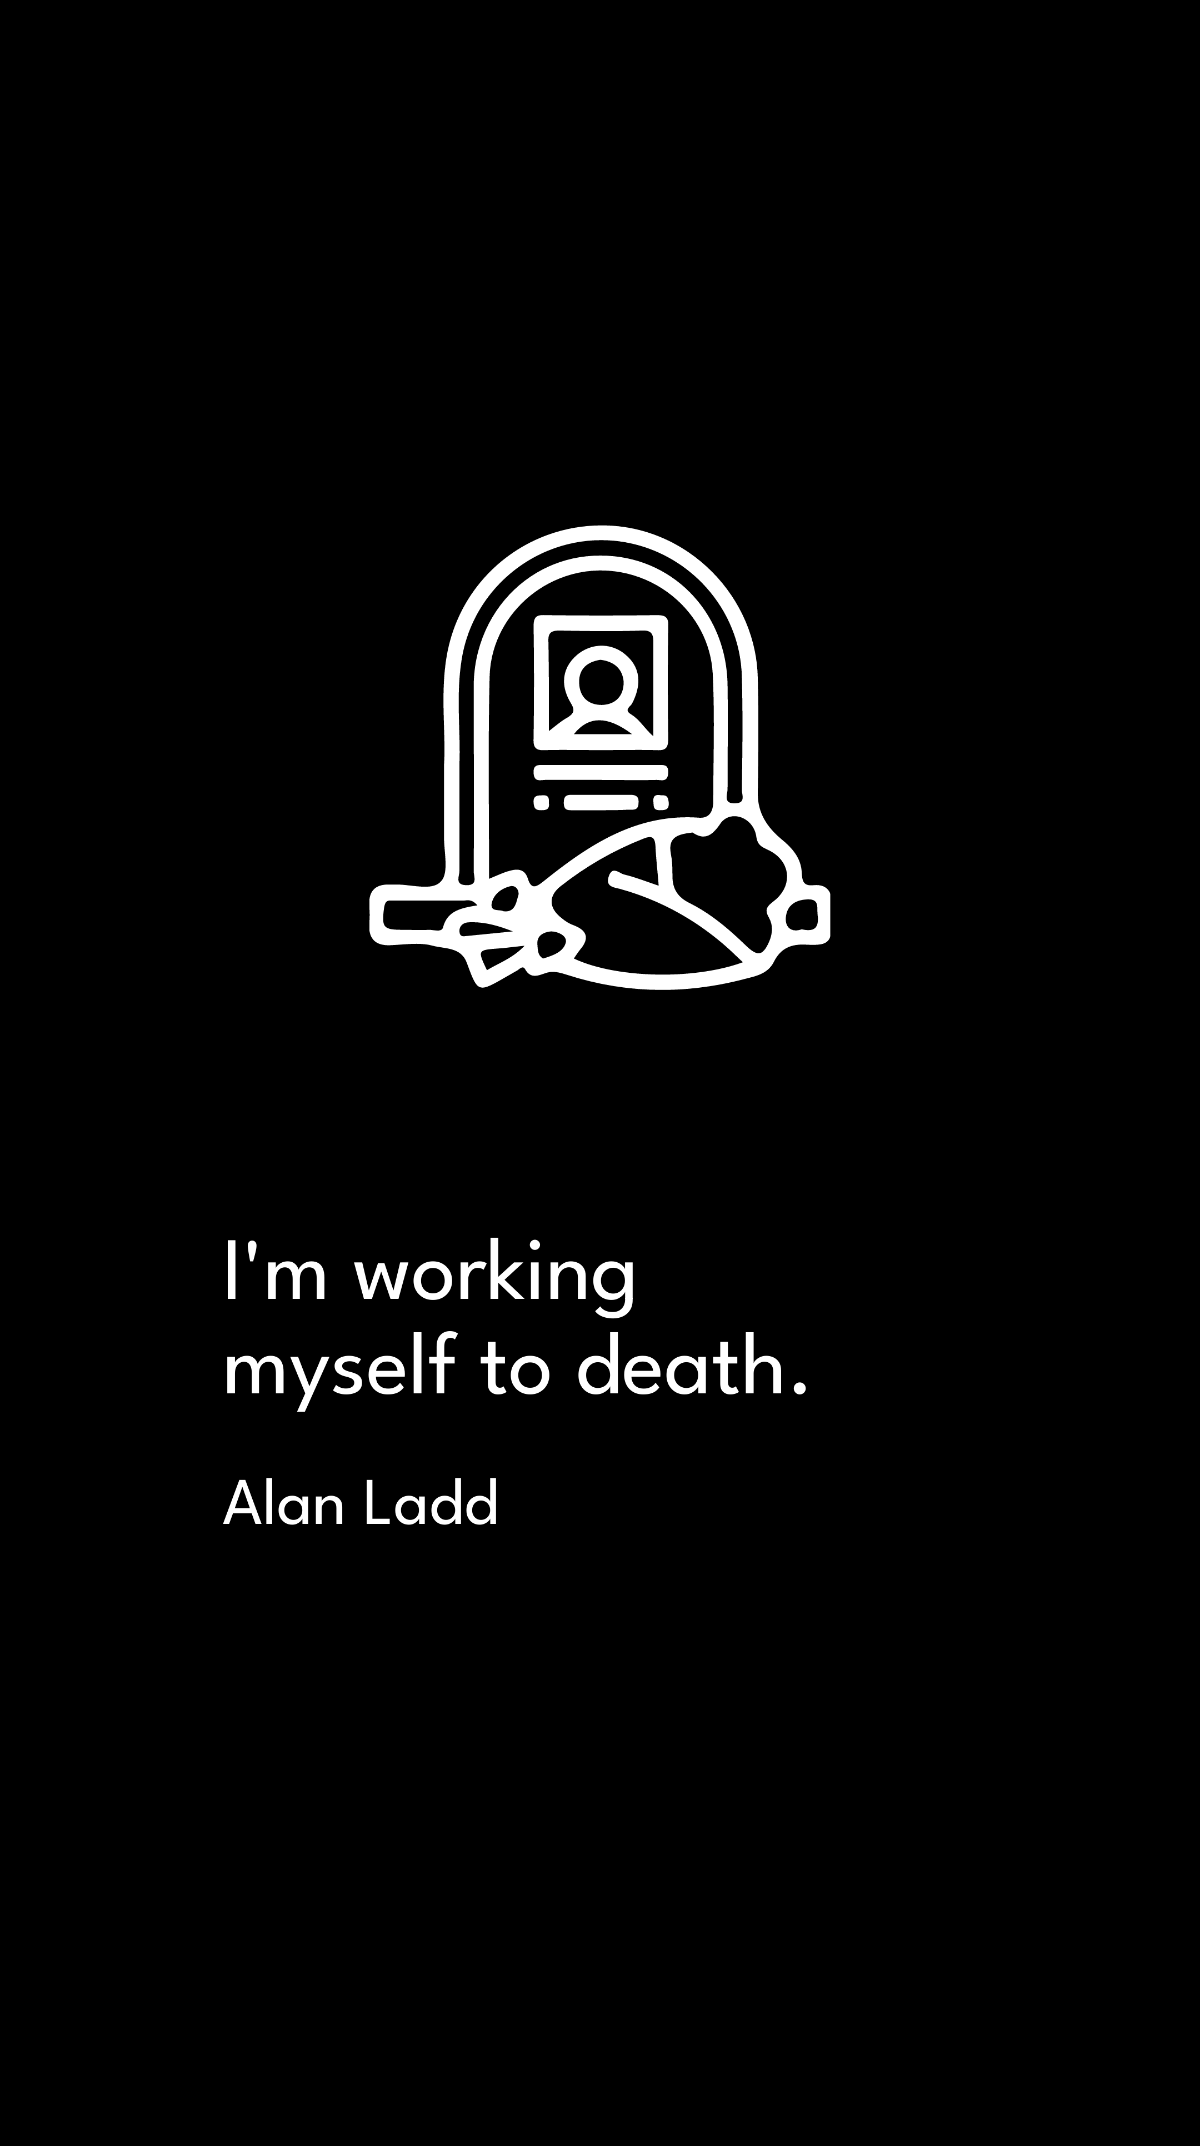 Free Alan Ladd - I'm working myself to death. Template